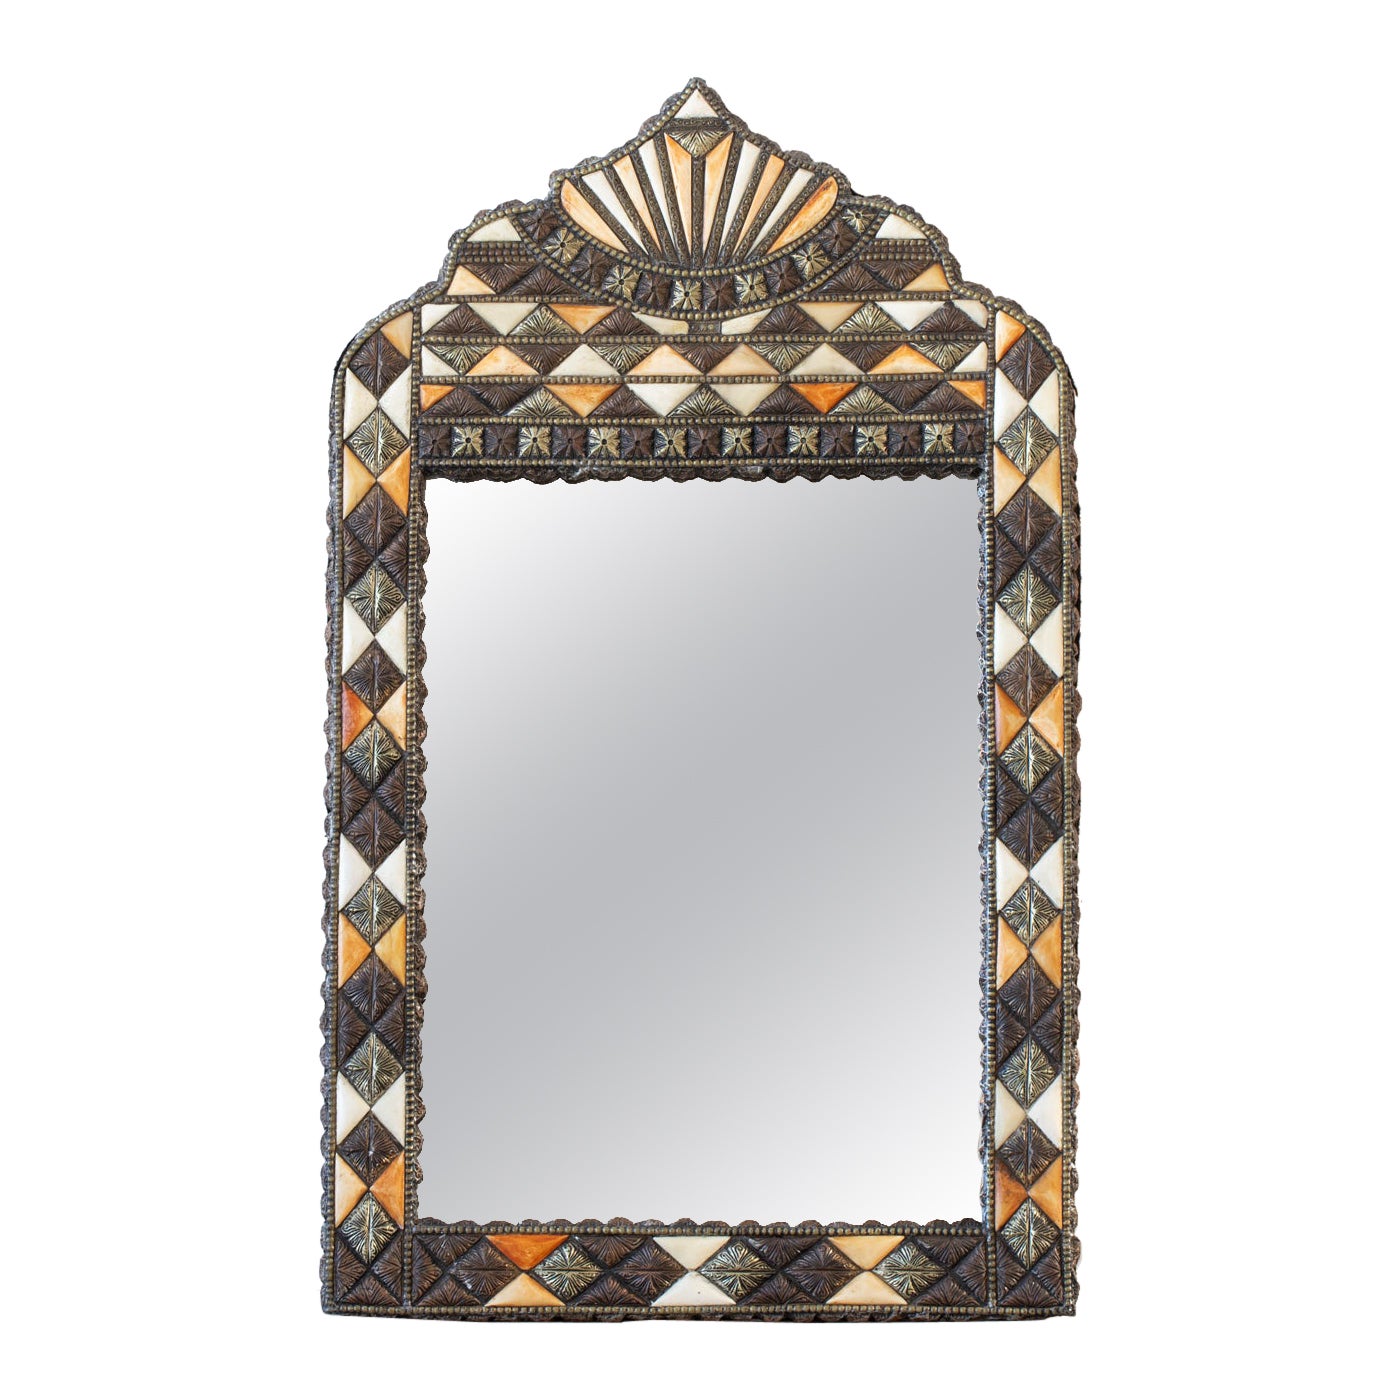 1950s Inlaid Moroccan Mirror